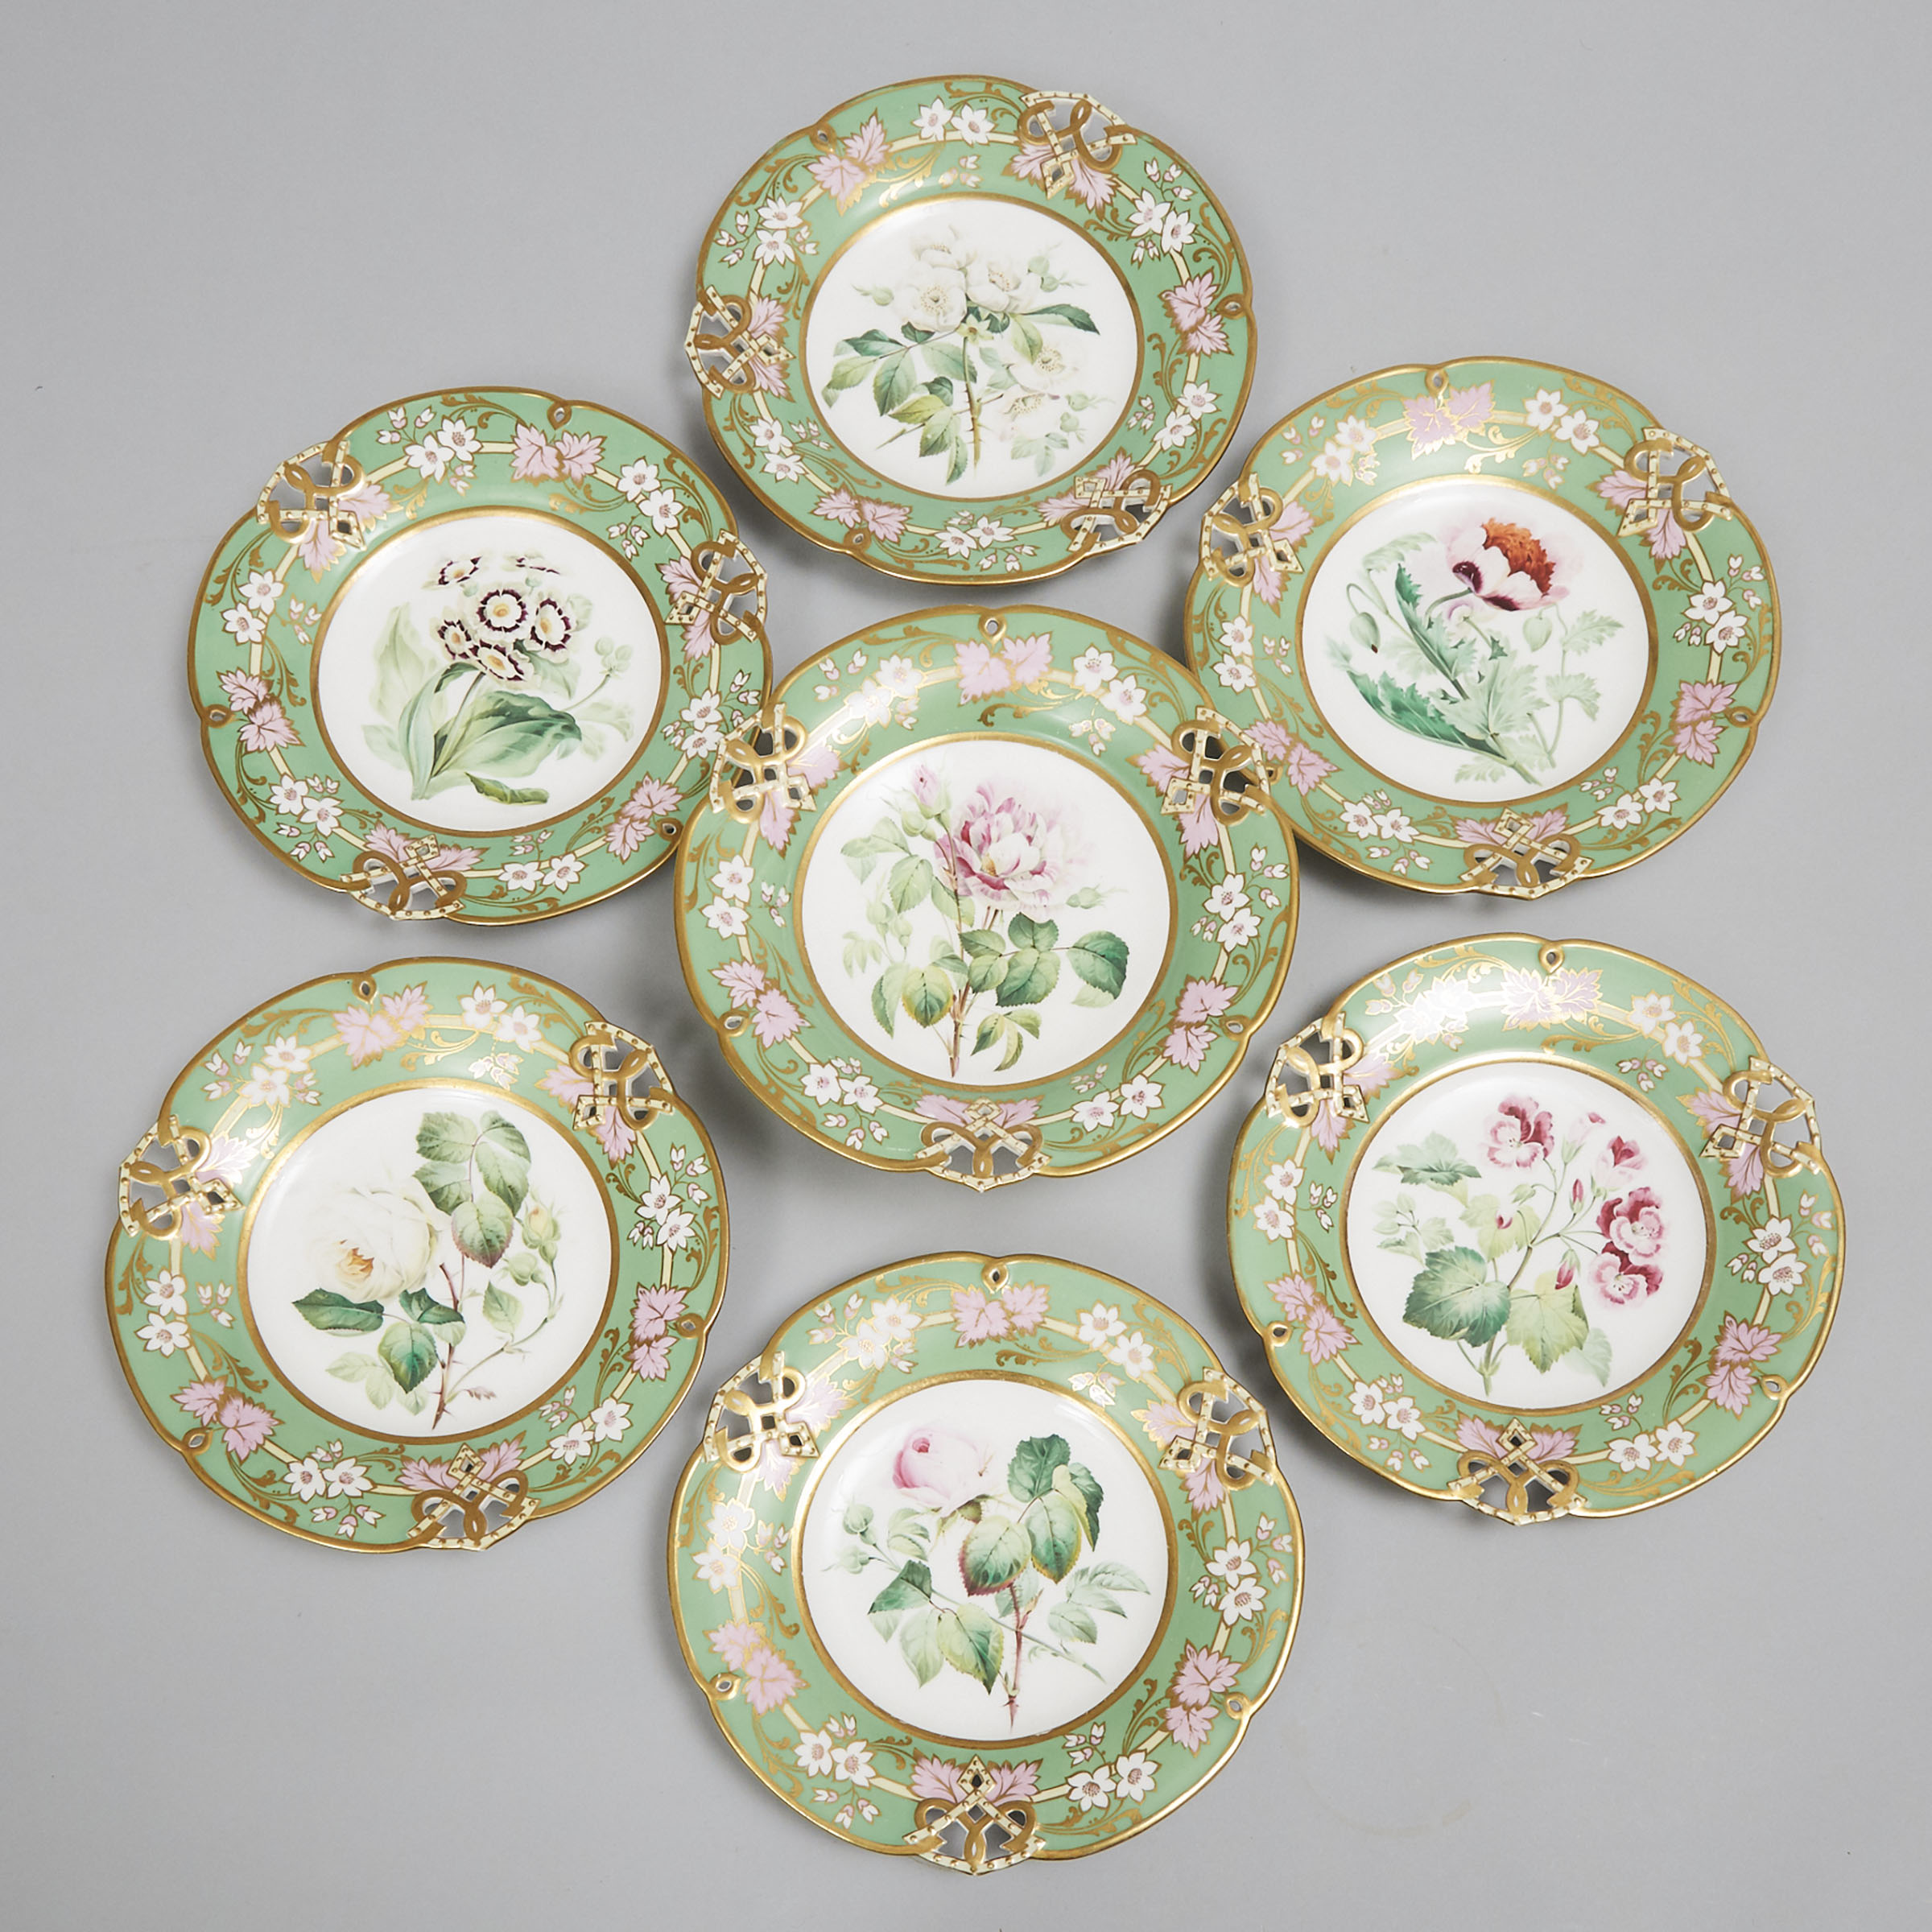 Six Ridgway Botanical Dessert Plates and a Comport, c.1840